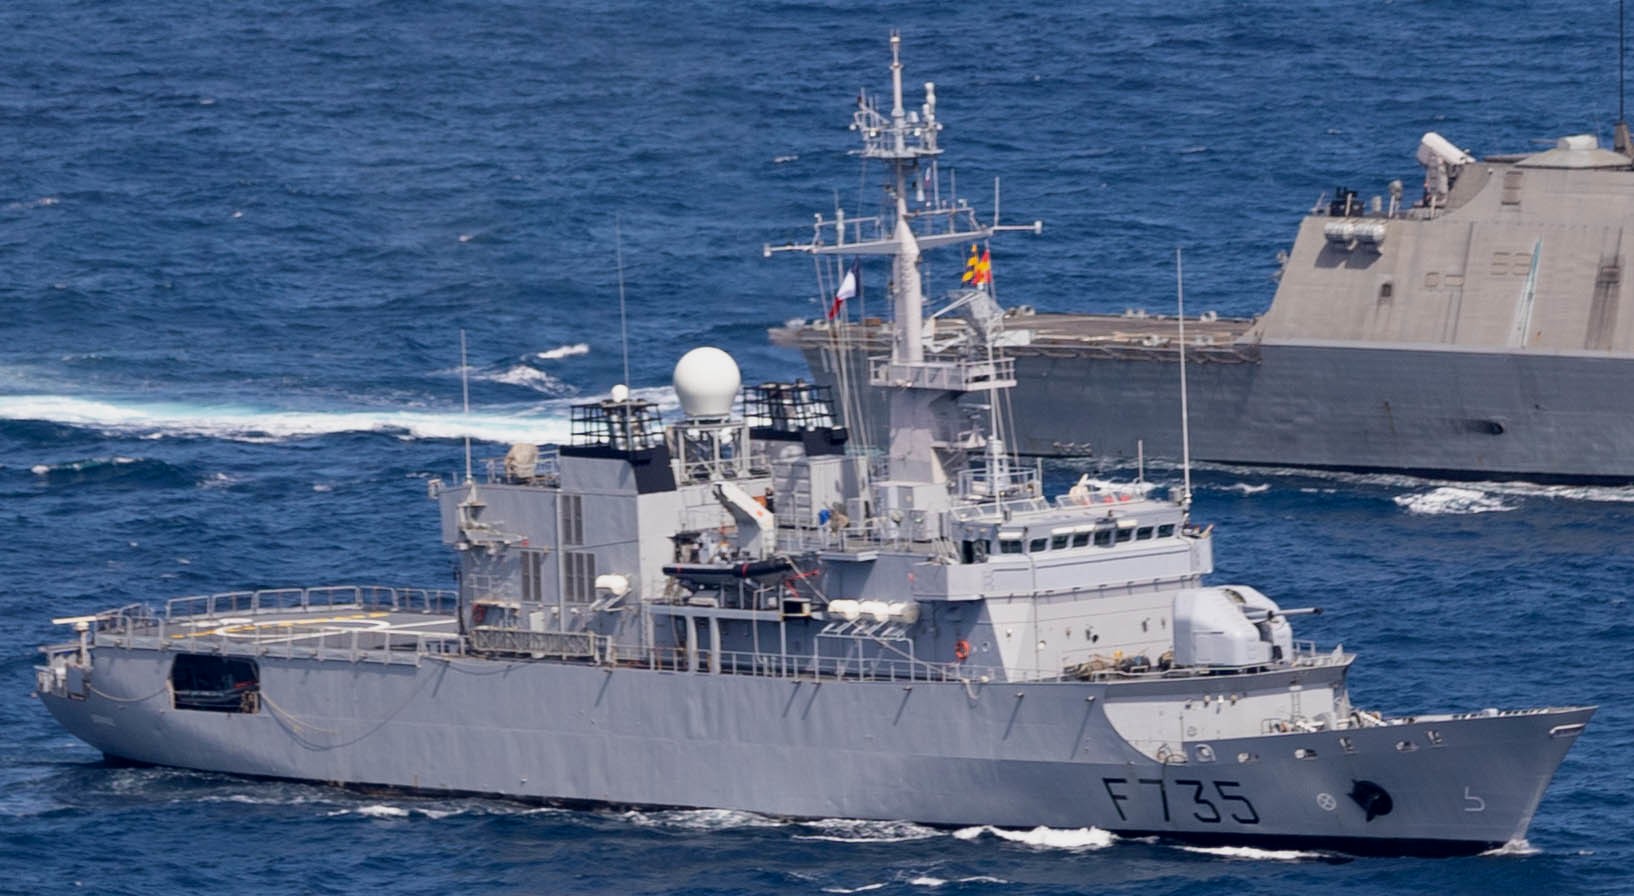 f-735 fs germinal floreal class frigate french navy marine nationale fregate de surveillance 08